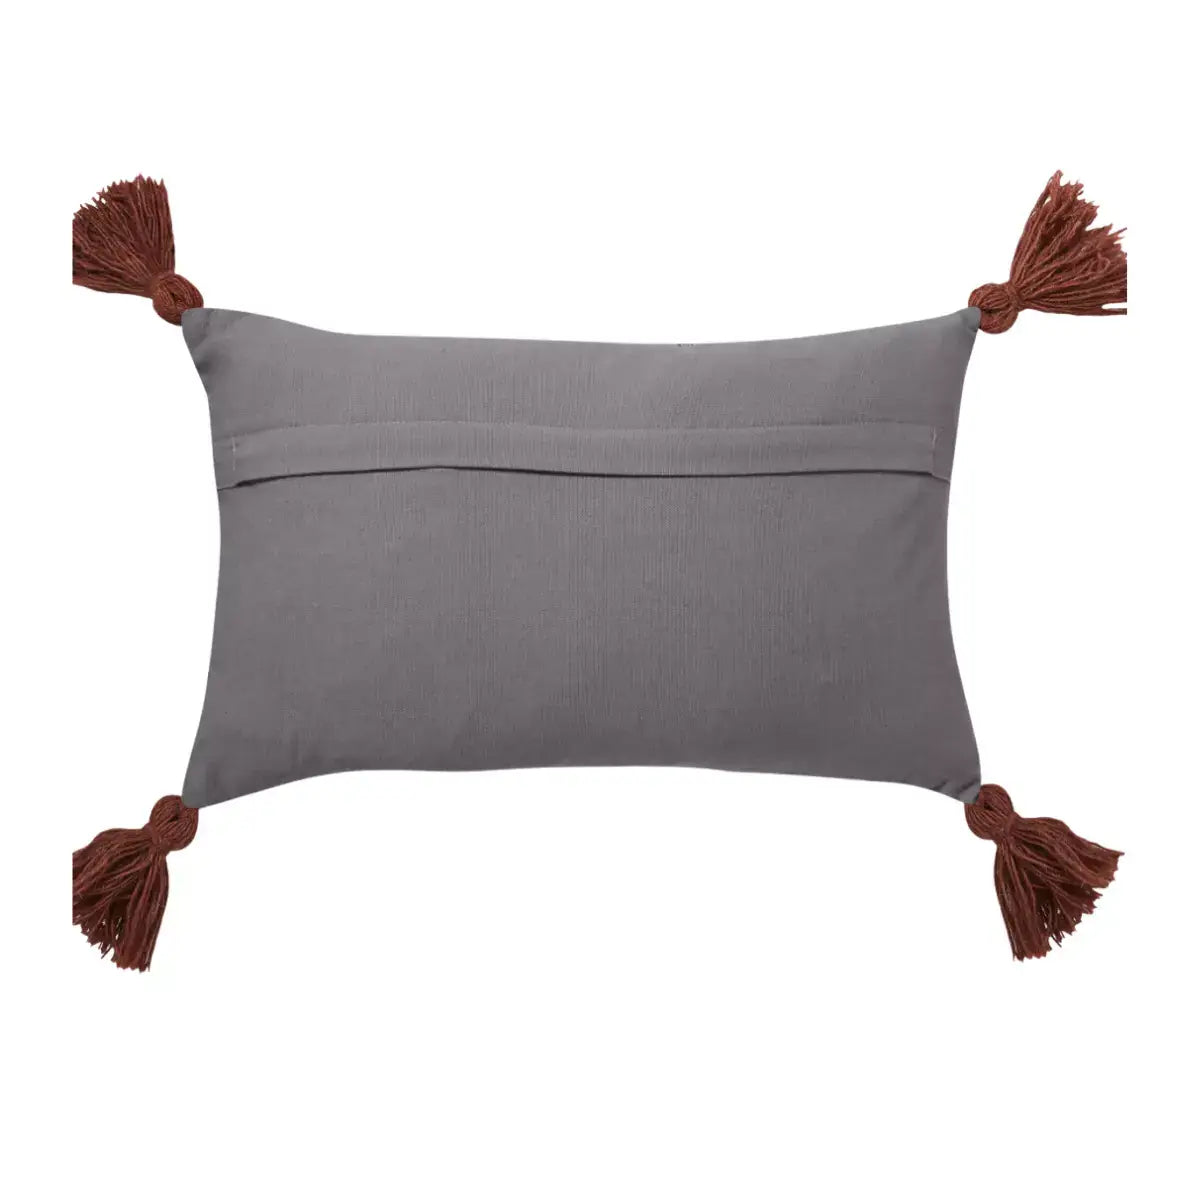 A Mya Mini Cushion from L&M Home with brown tassels.